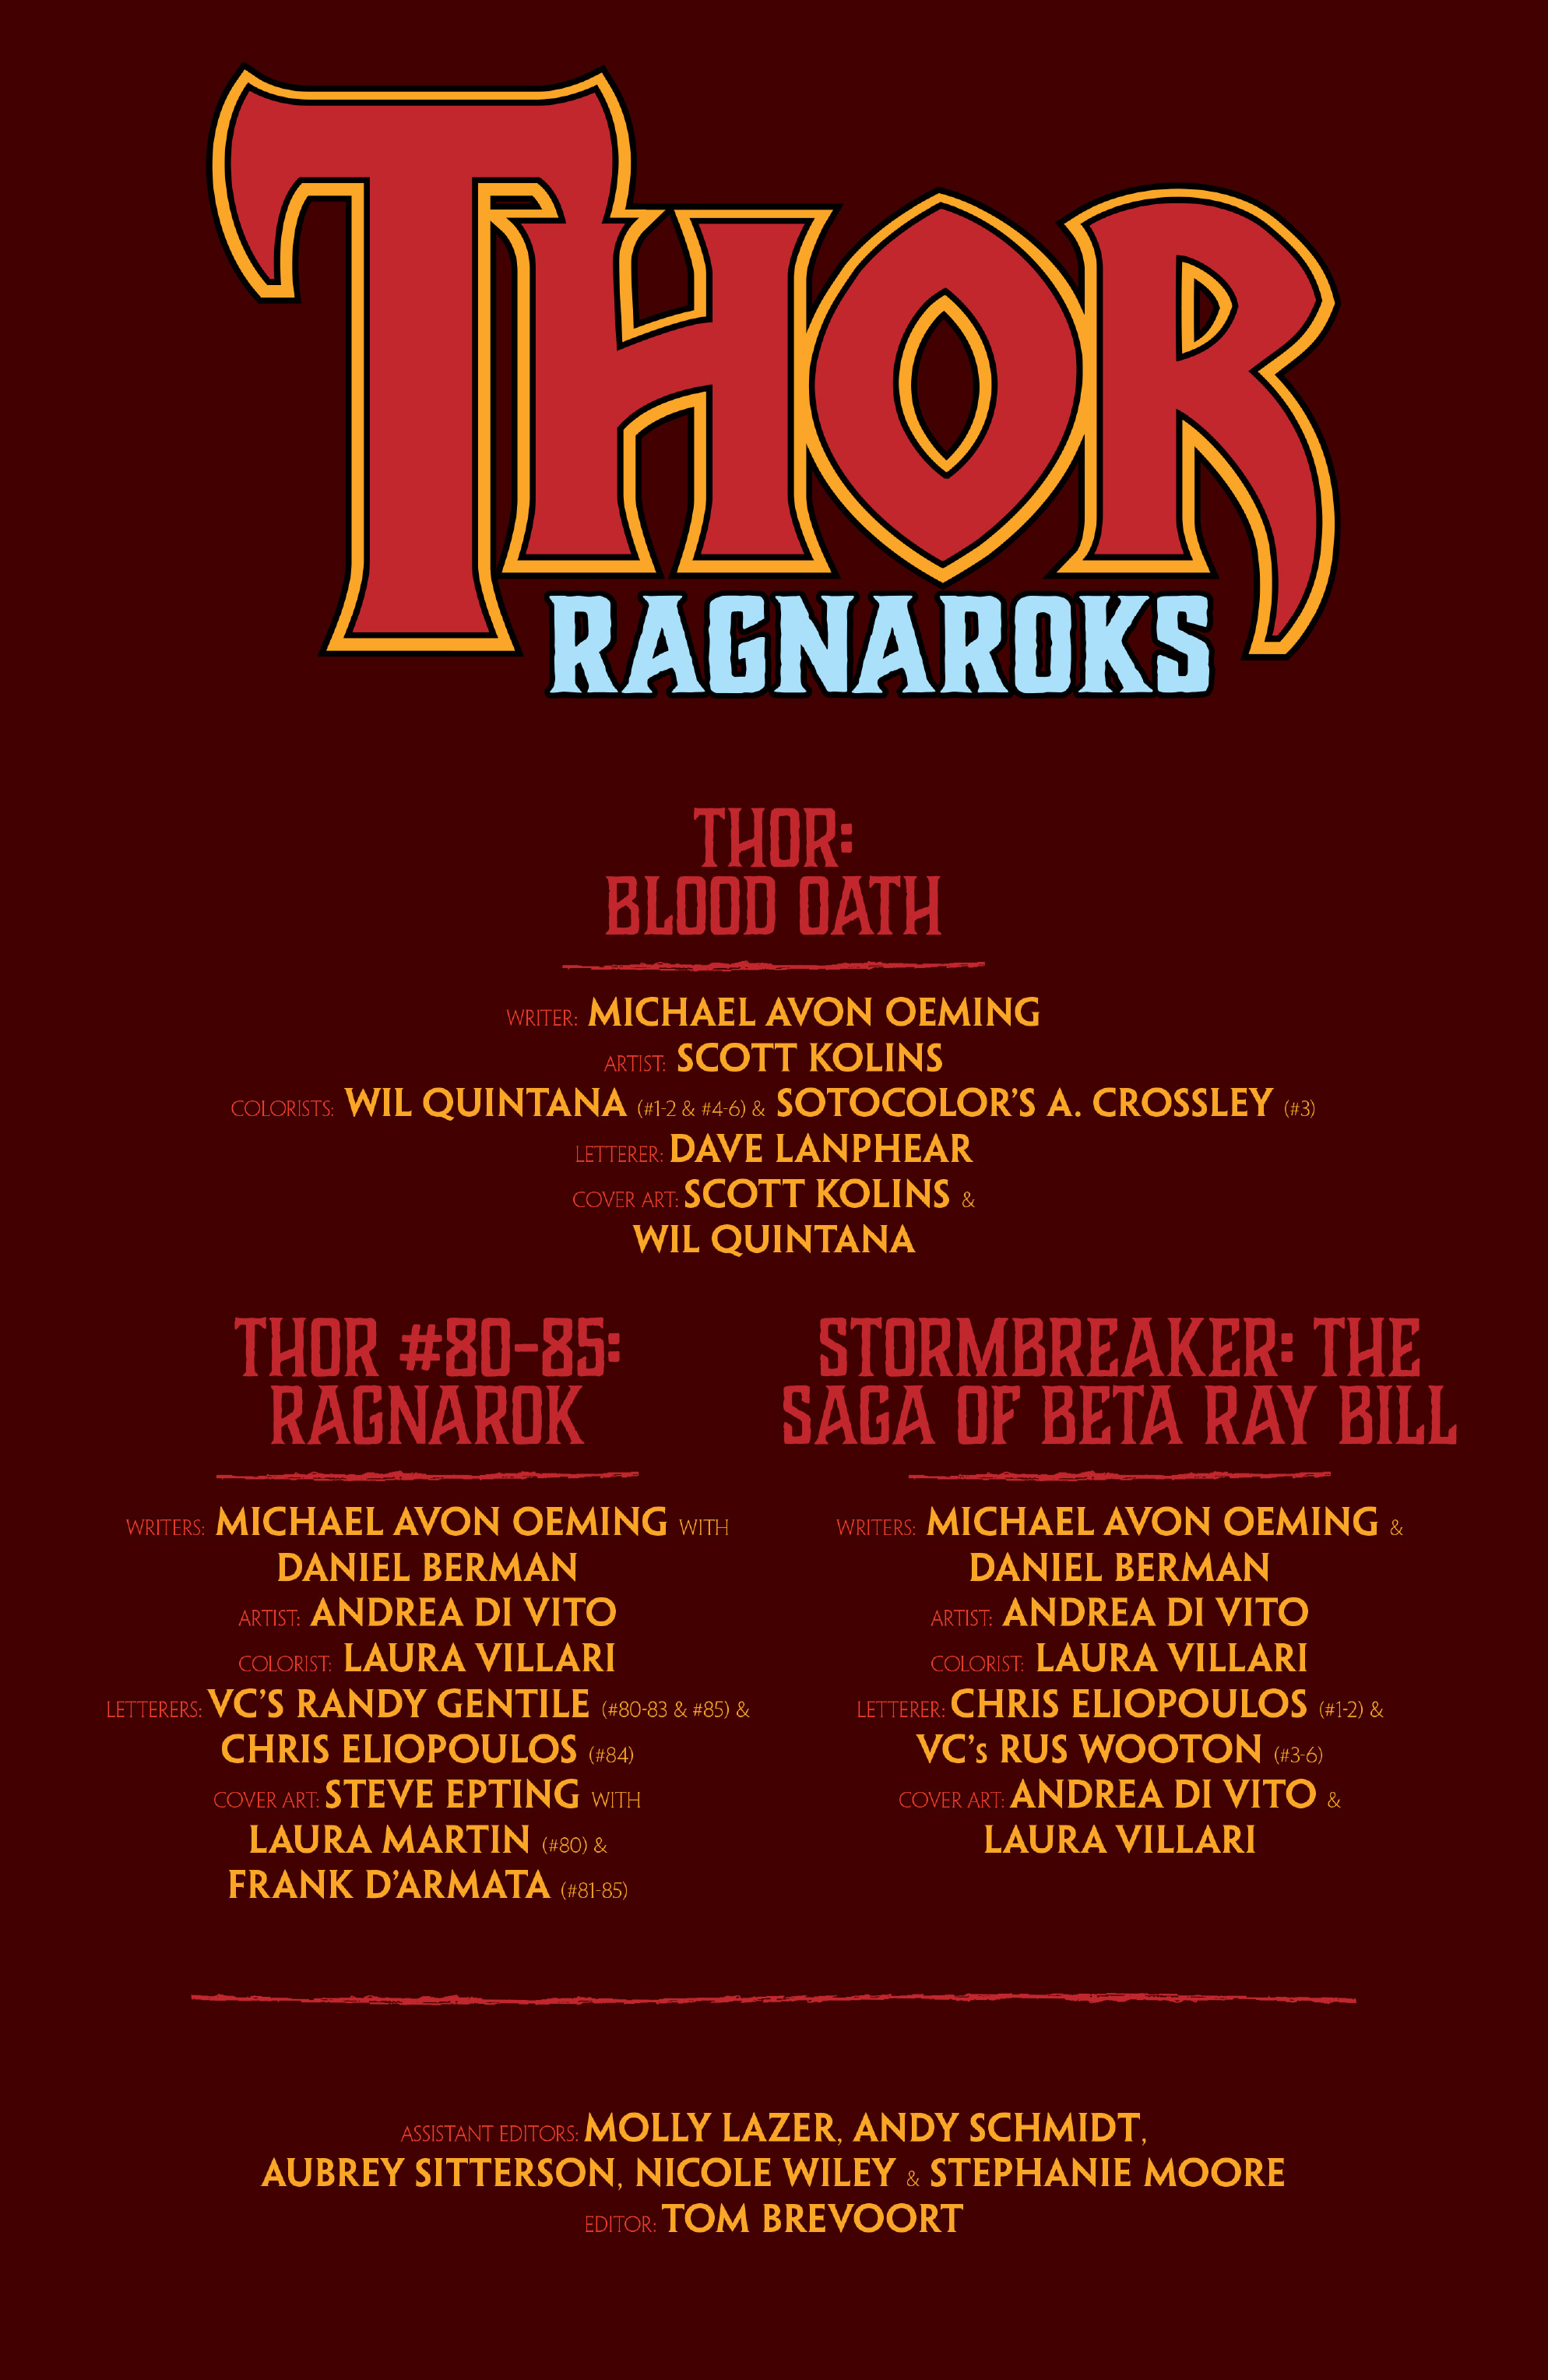 Read online Thor: Ragnaroks comic -  Issue # TPB (Part 1) - 4